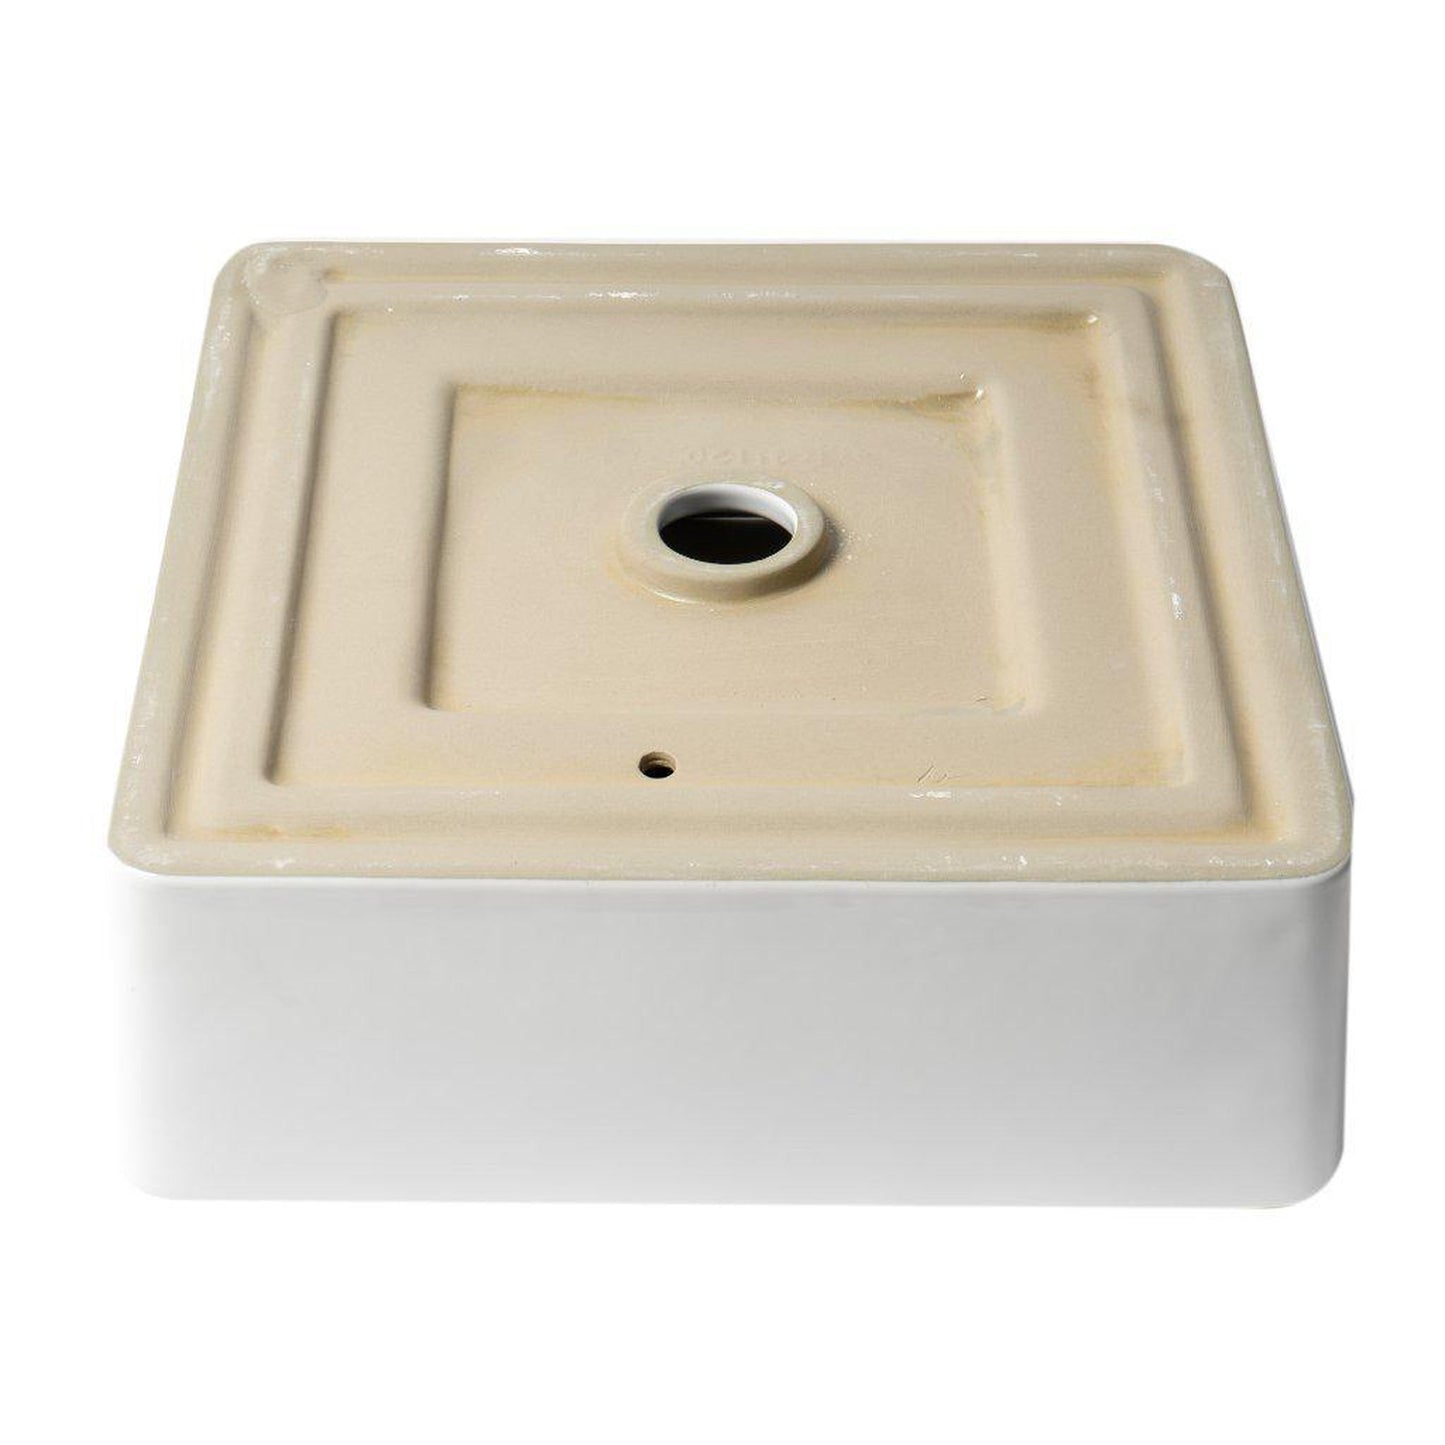 ALFI Brand ABC903-W 16" White Above Mount Square Ceramic Bathroom Sink